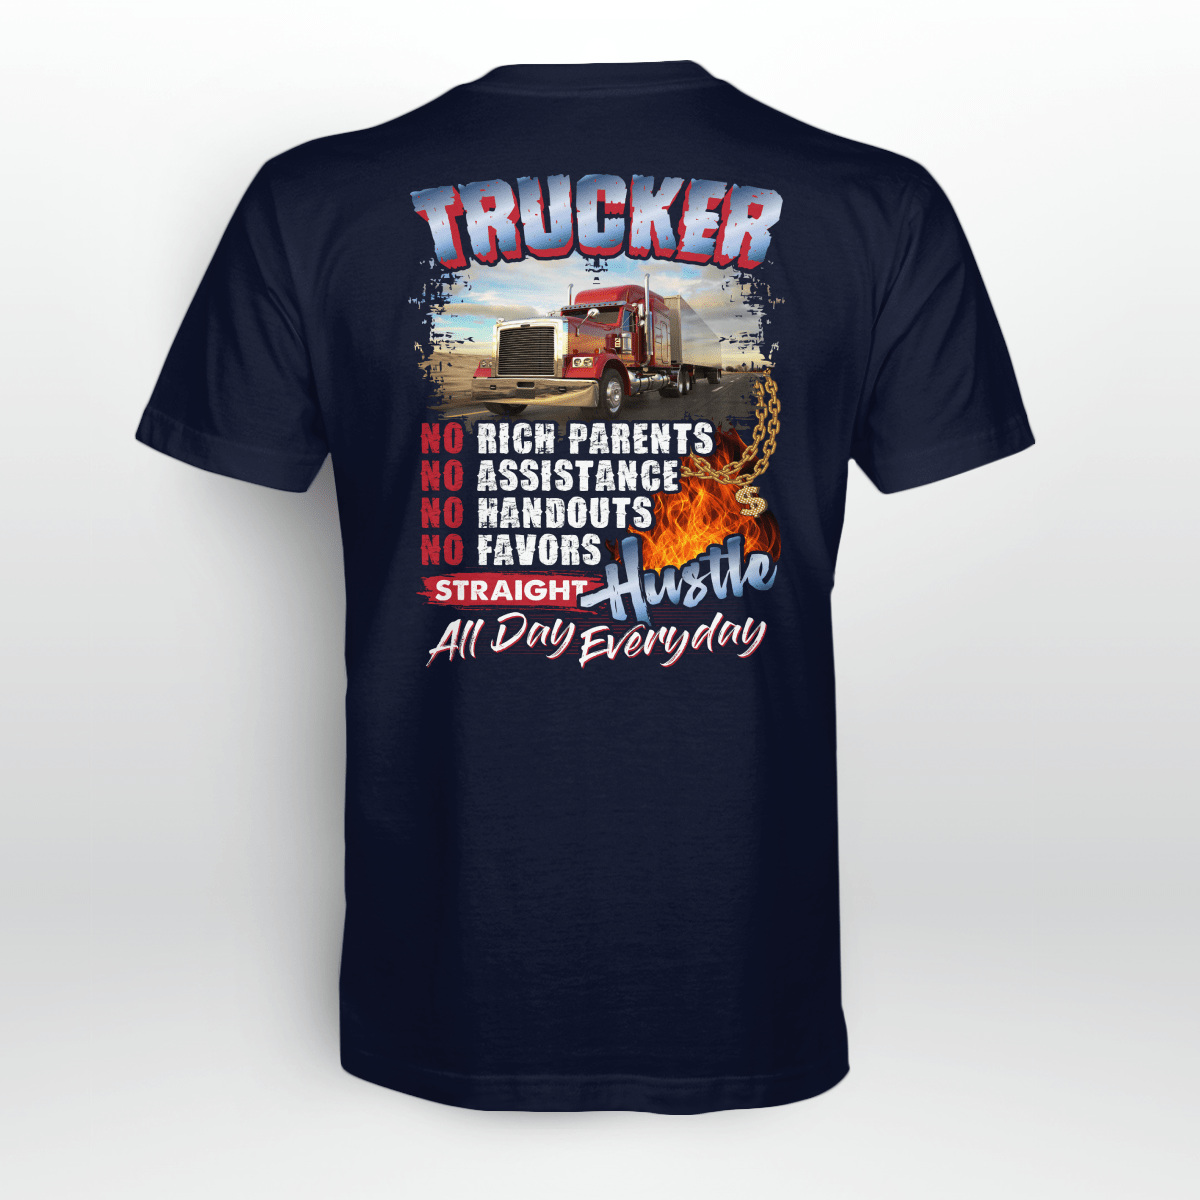 Trucker hustle all day everyday-T-Shirt -#M020523HUSTLE1BTRUCZ6